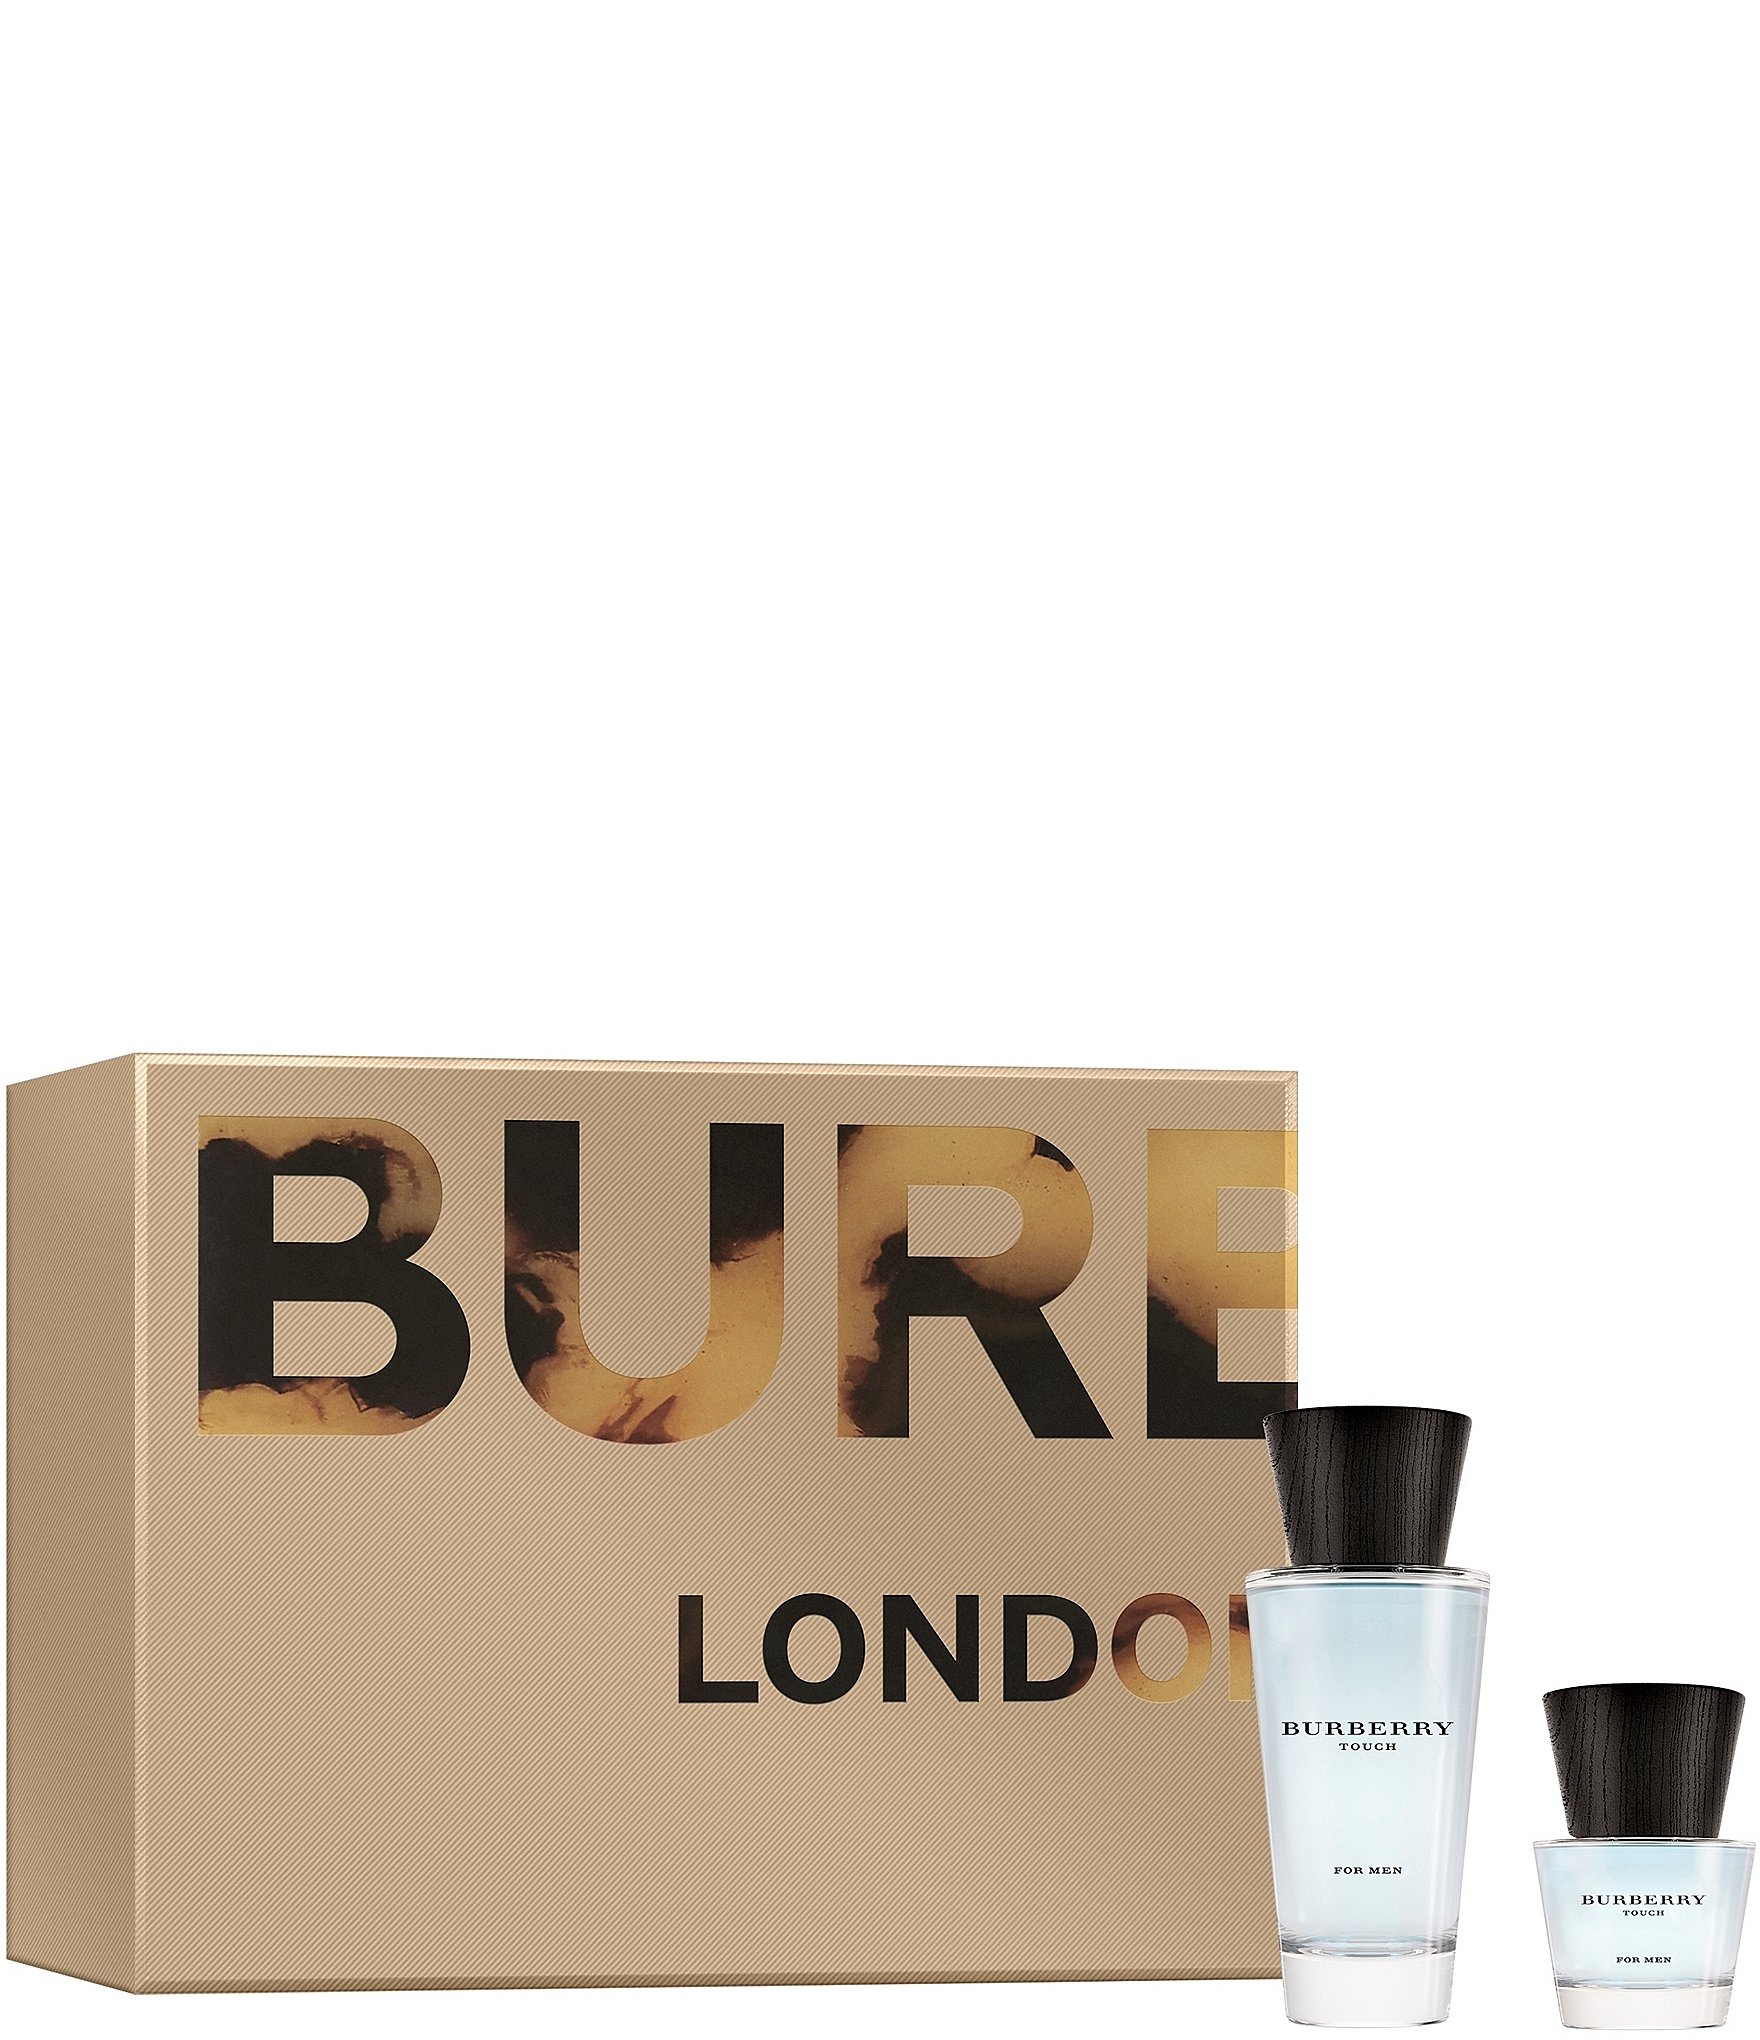 Burberry Men's Fragrance & Perfume Gifts & Value Sets | Dillard's